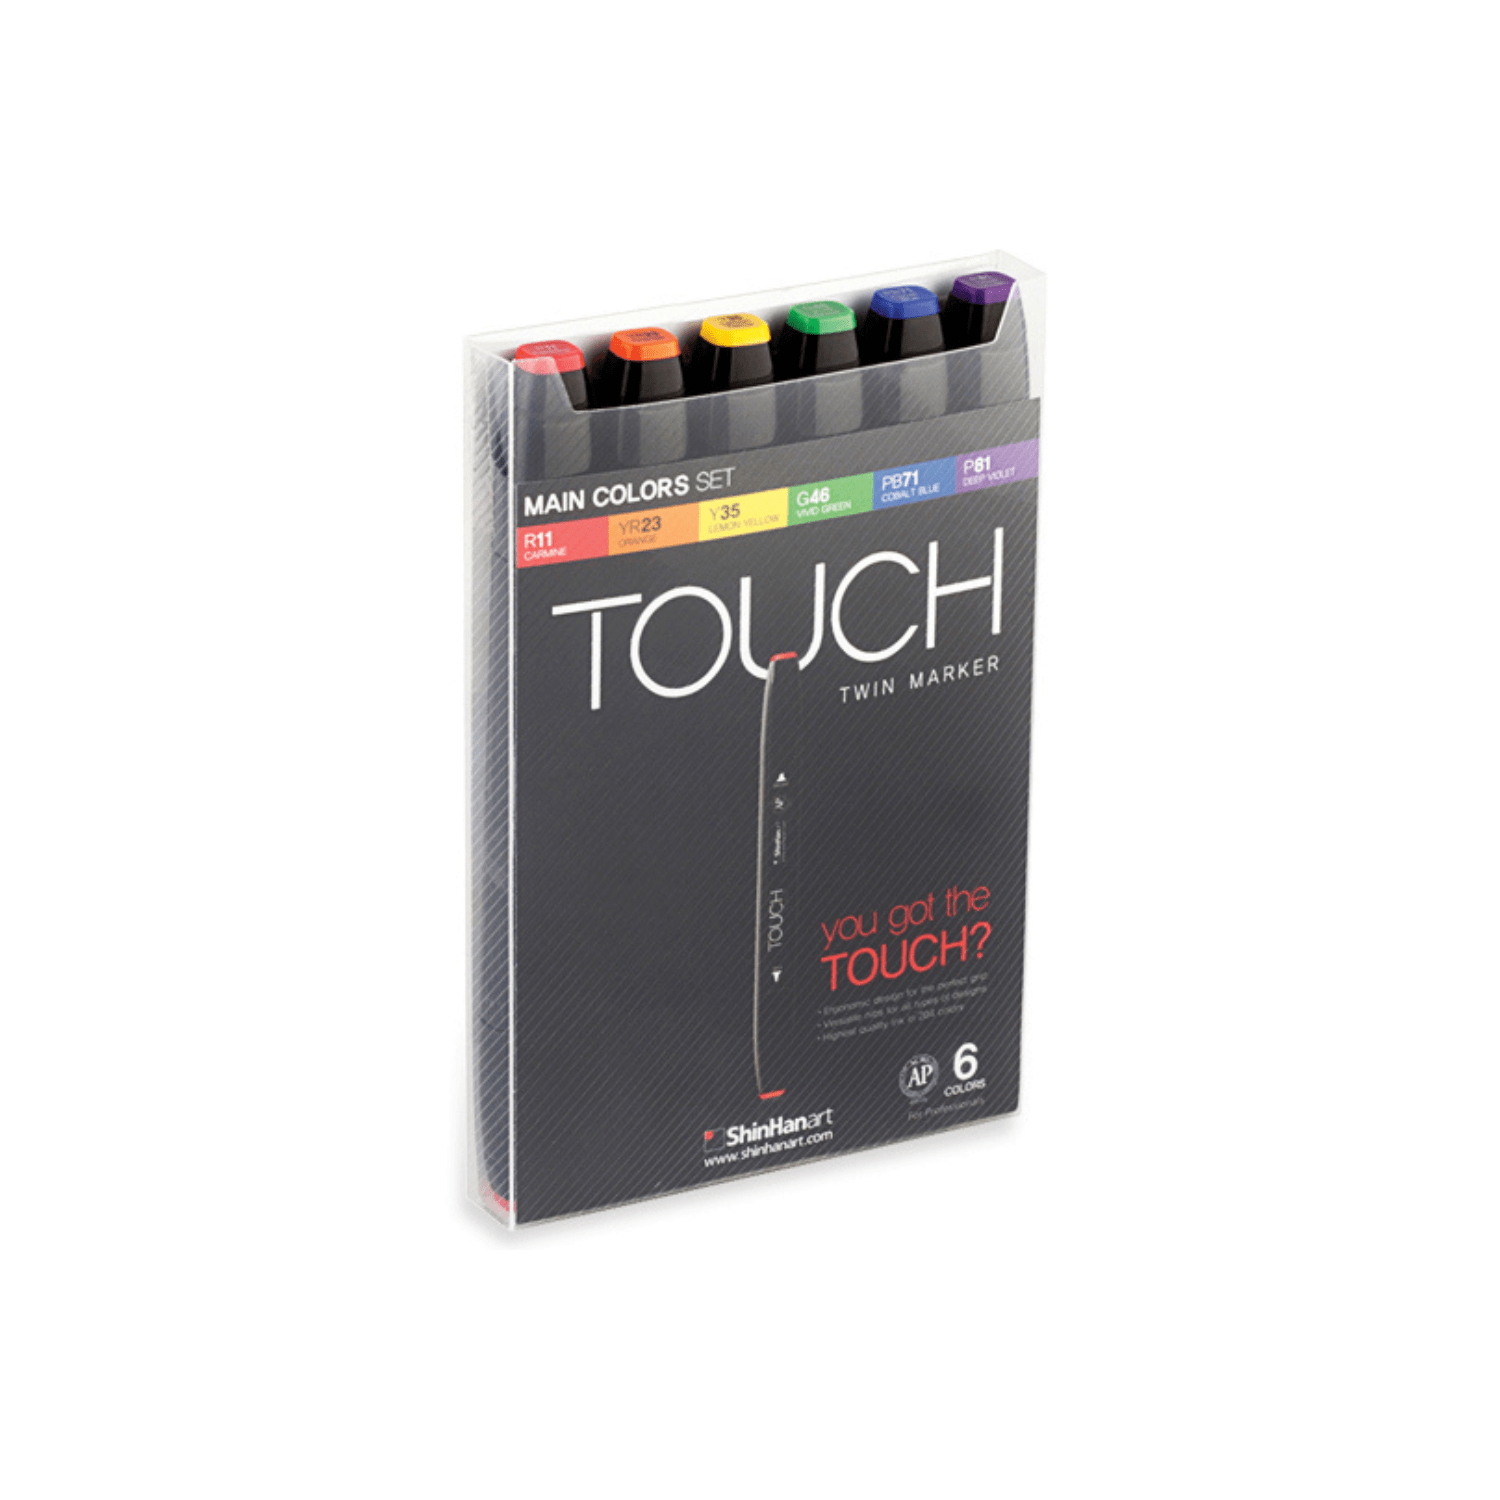 ShinHanart Tegneartikler Touch Twin Markers 6 stk. Main Colors sæt